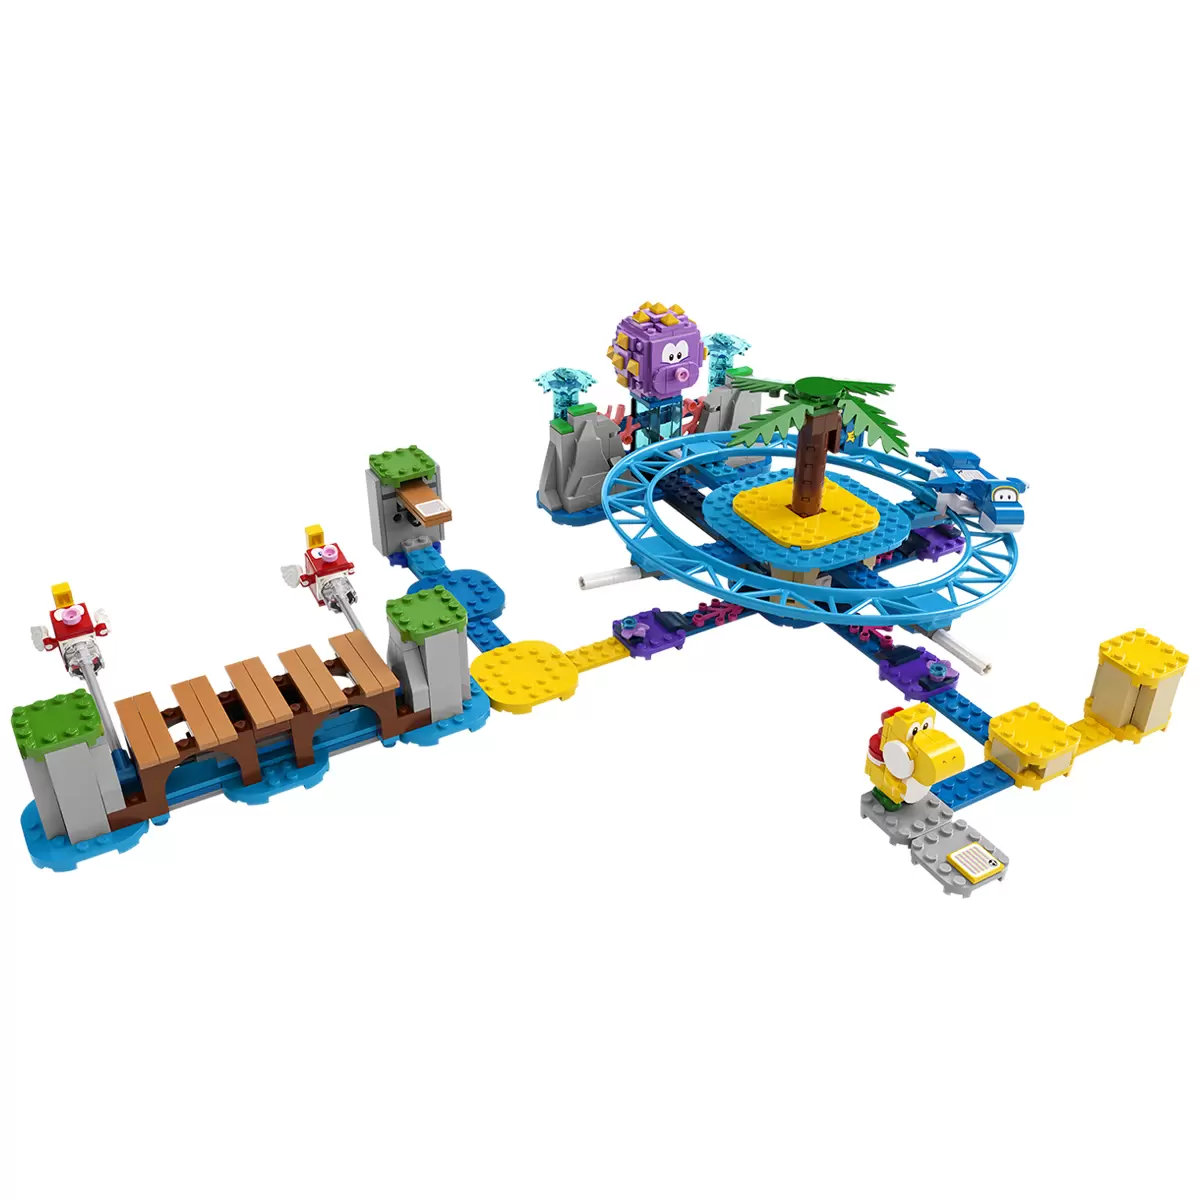 LEGO Super Mario Big Urchin Beach Ride Expansion 71400